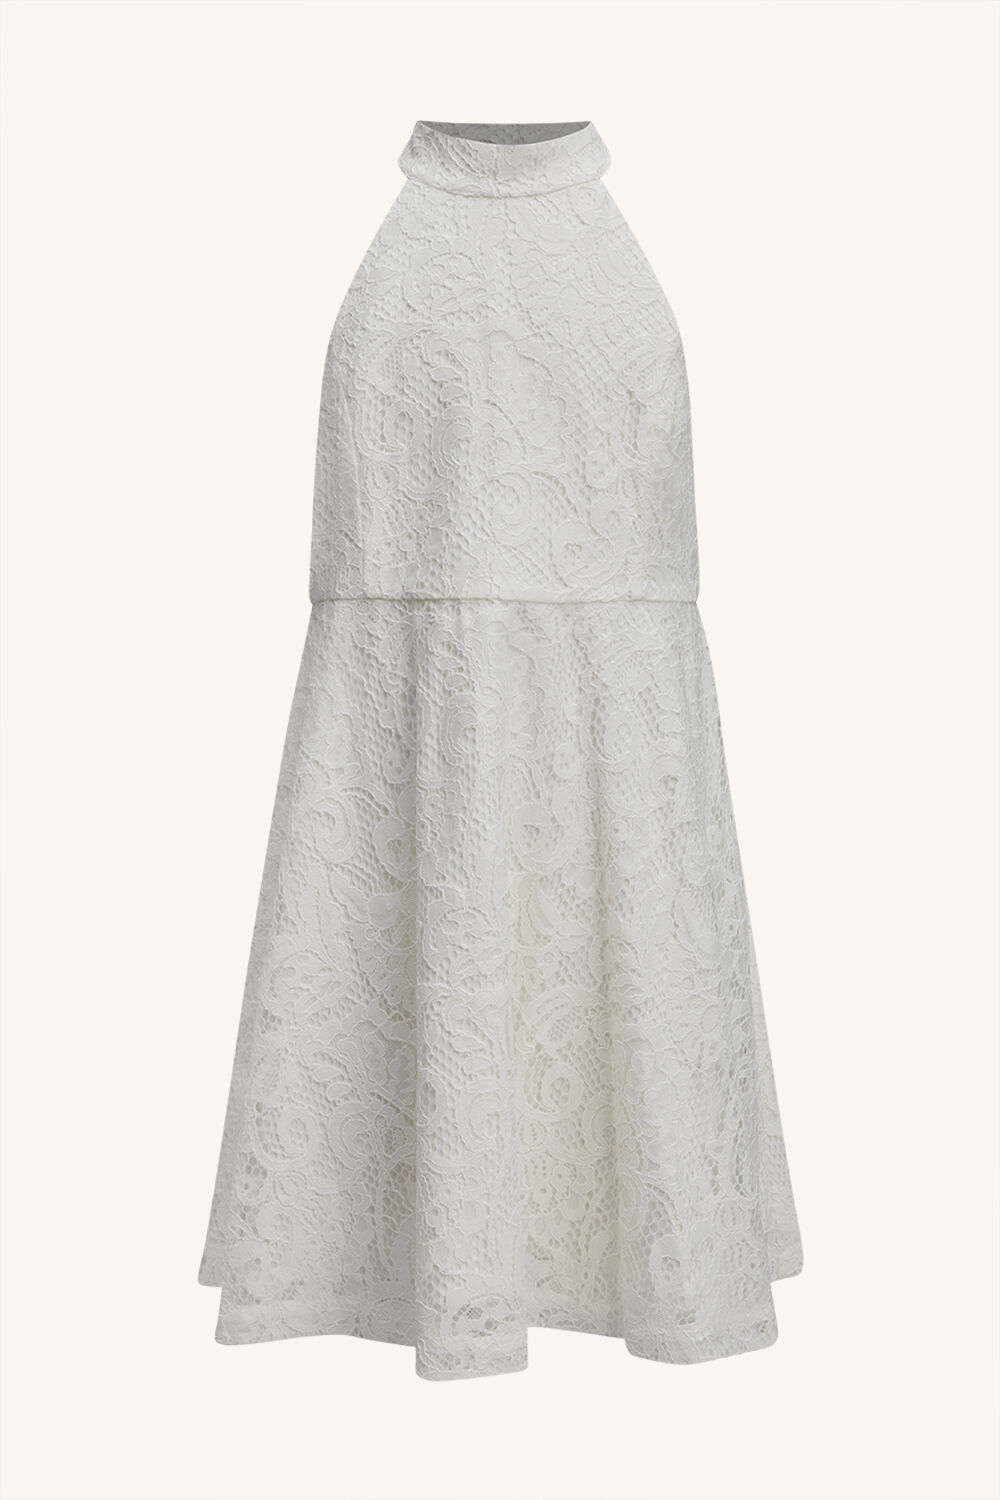 GIRLS VICTORIA LADDER LACE DRESS in colour BRIGHT WHITE